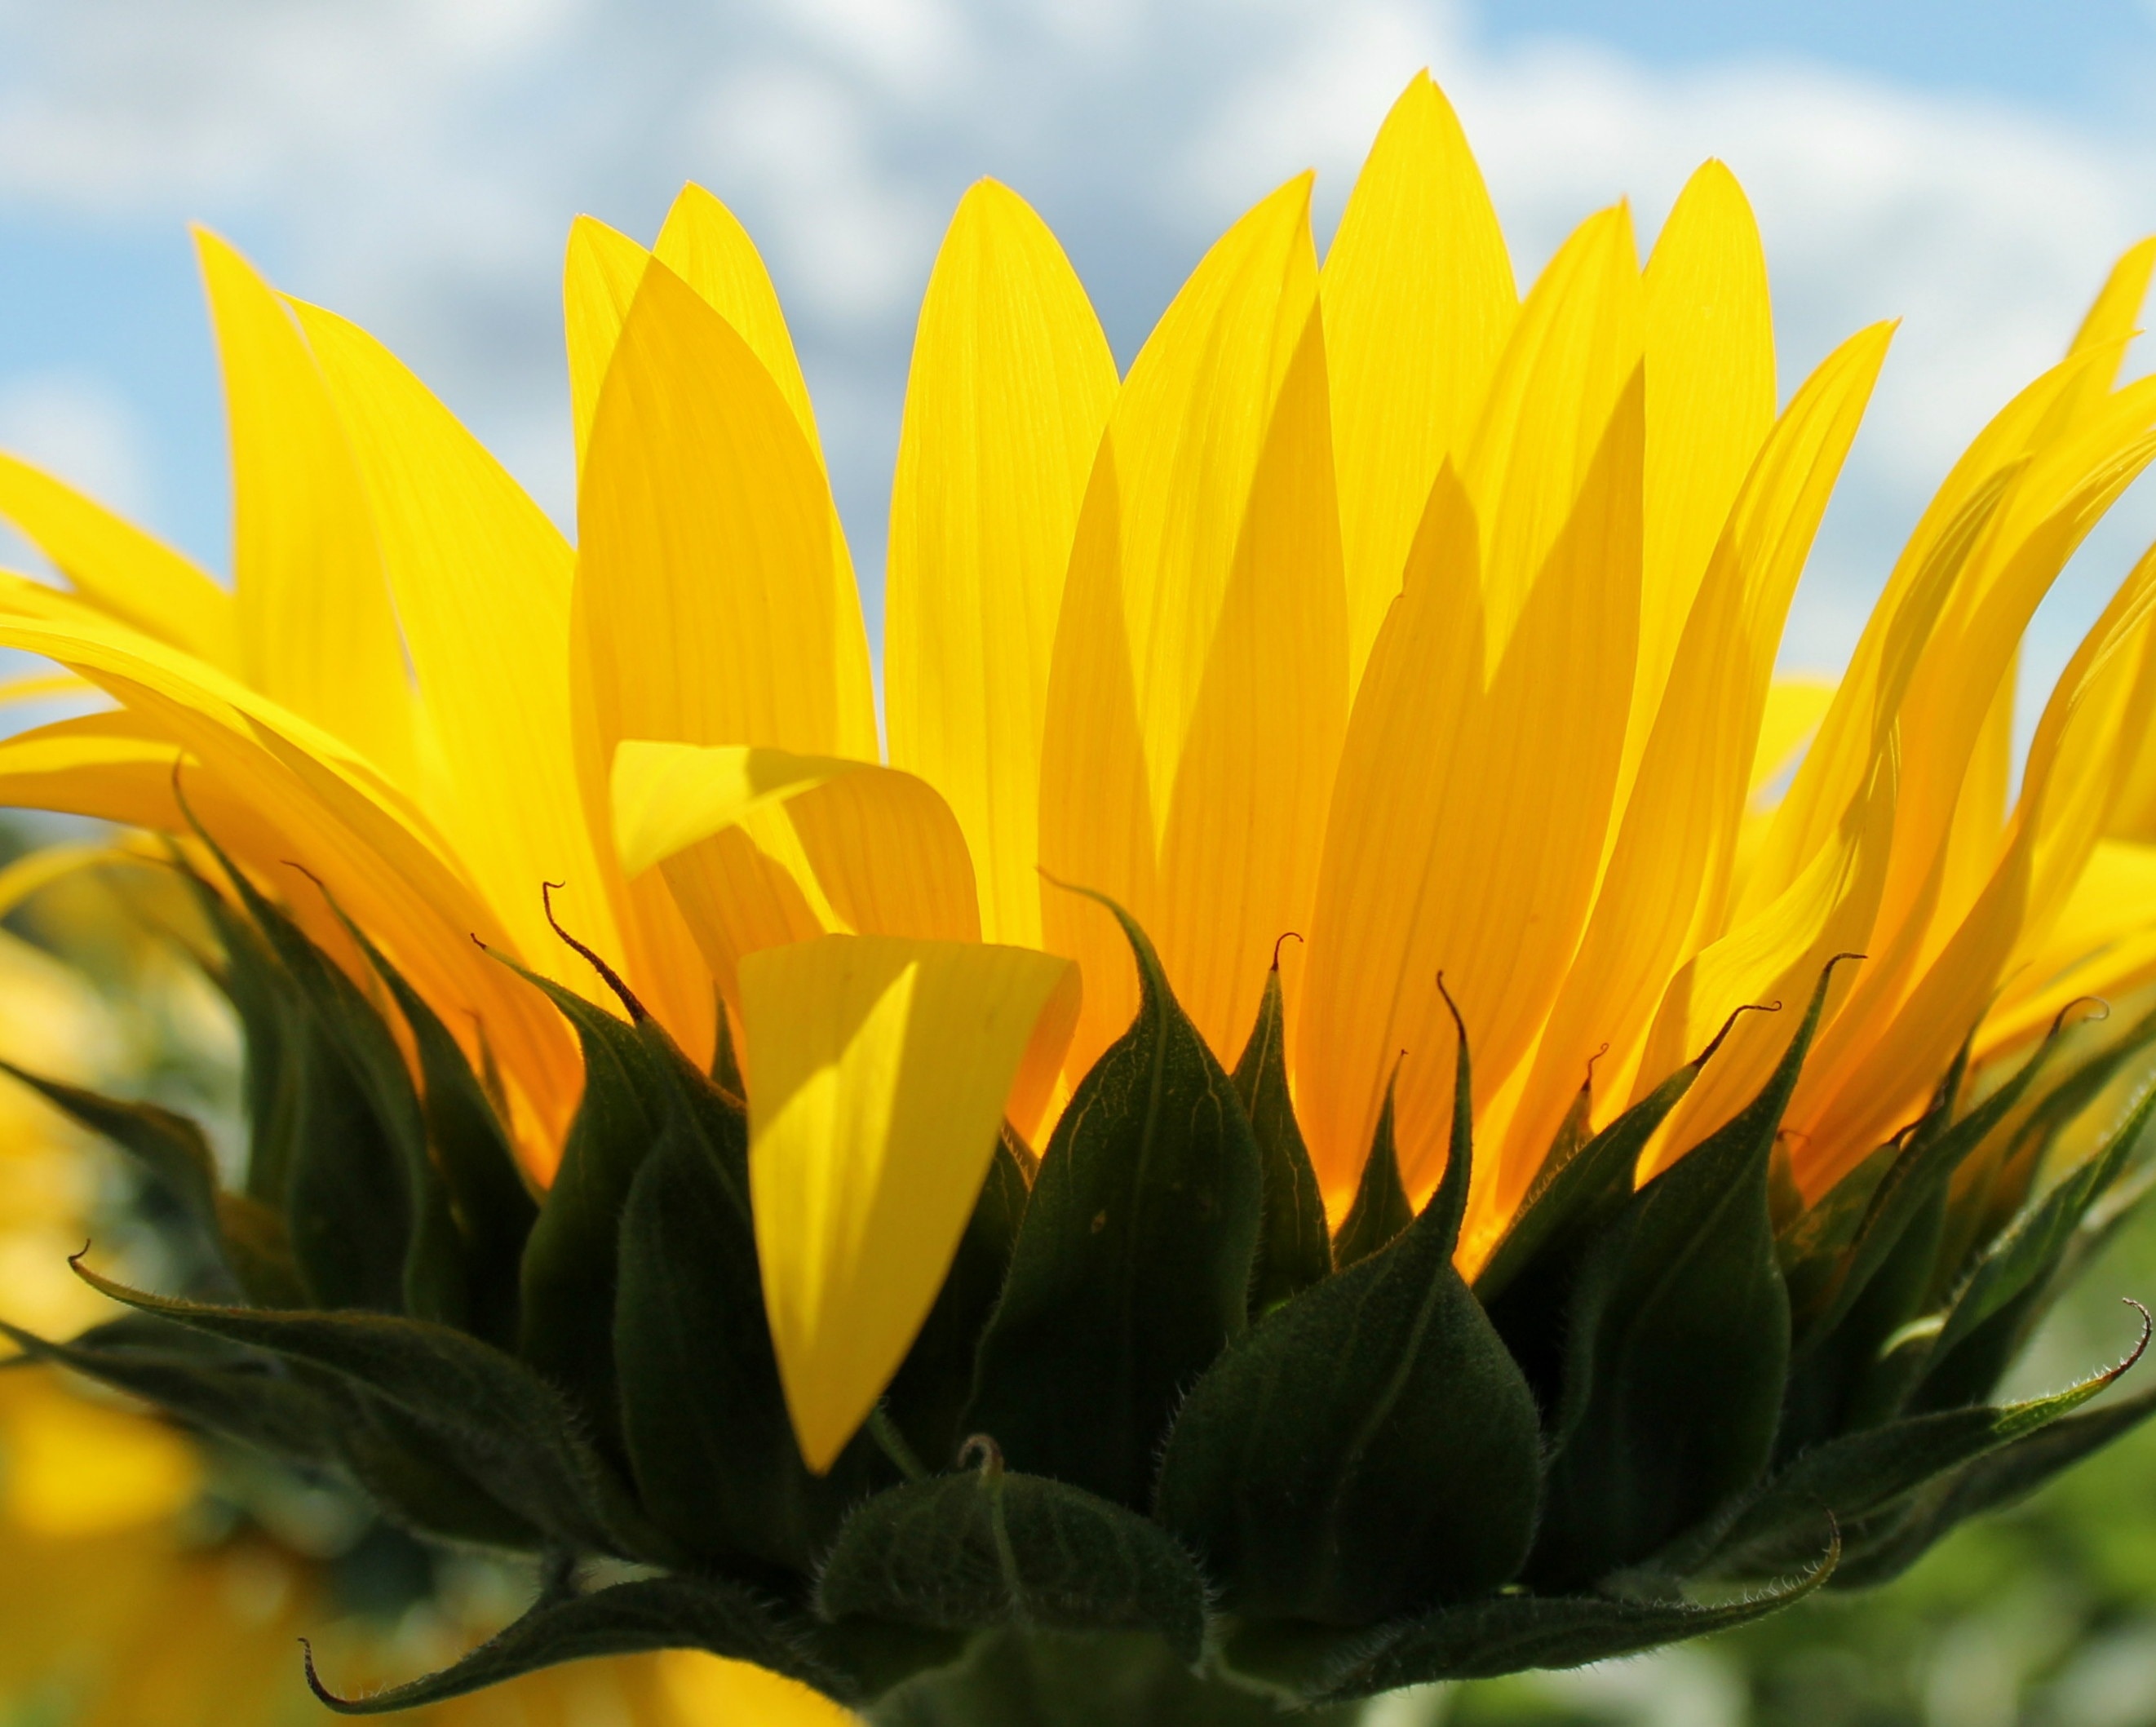 close up photo of sunflower